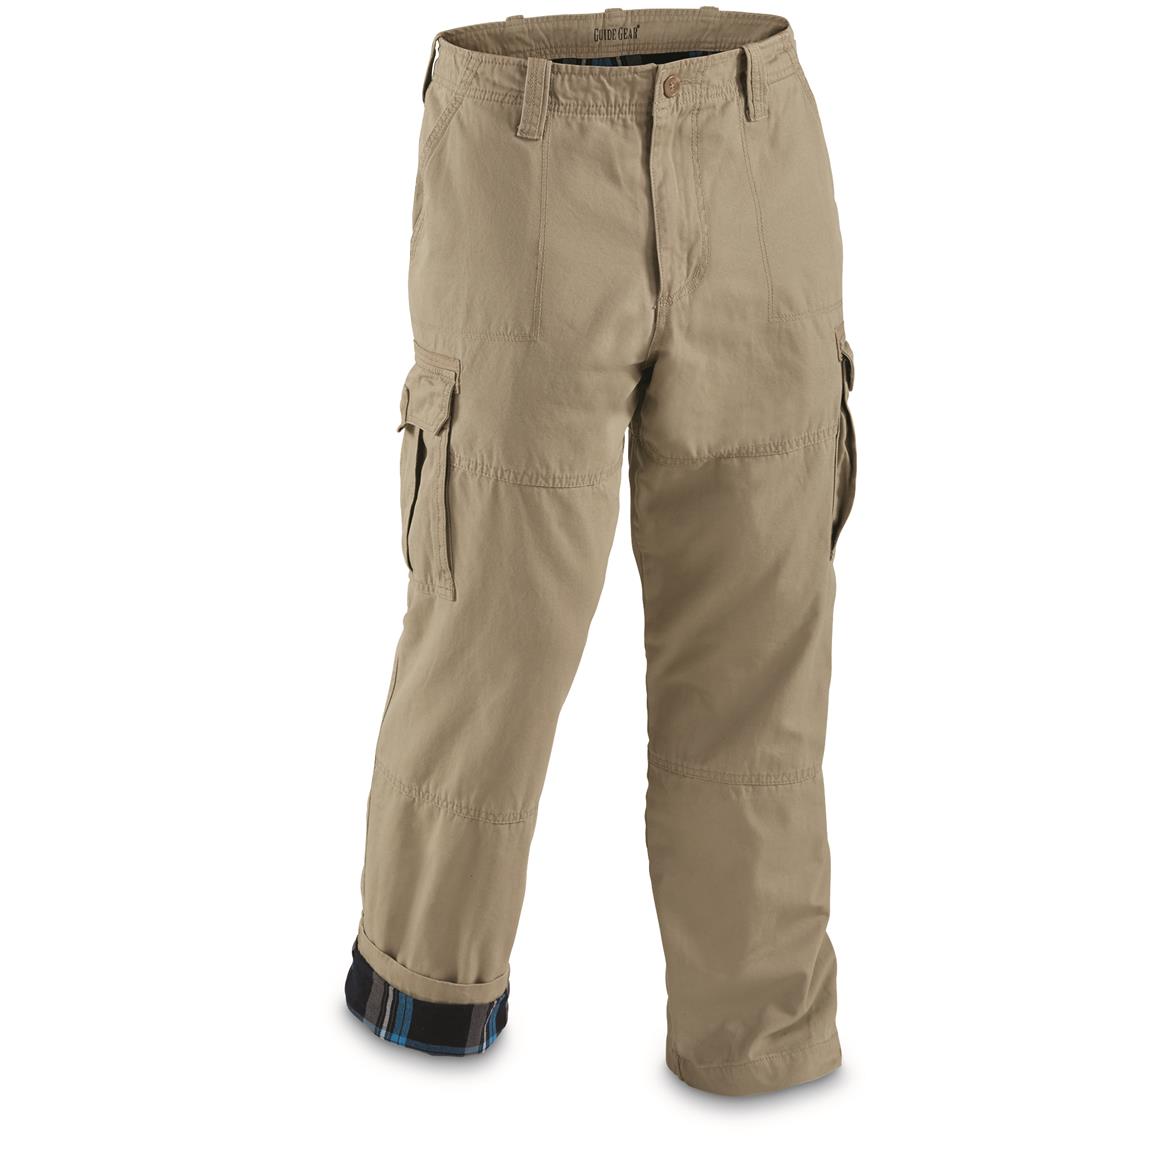 mens cargo pants guide gear menu0027s flannel lined cargo pants, khaki - toasty-warm flannel MSNISPC